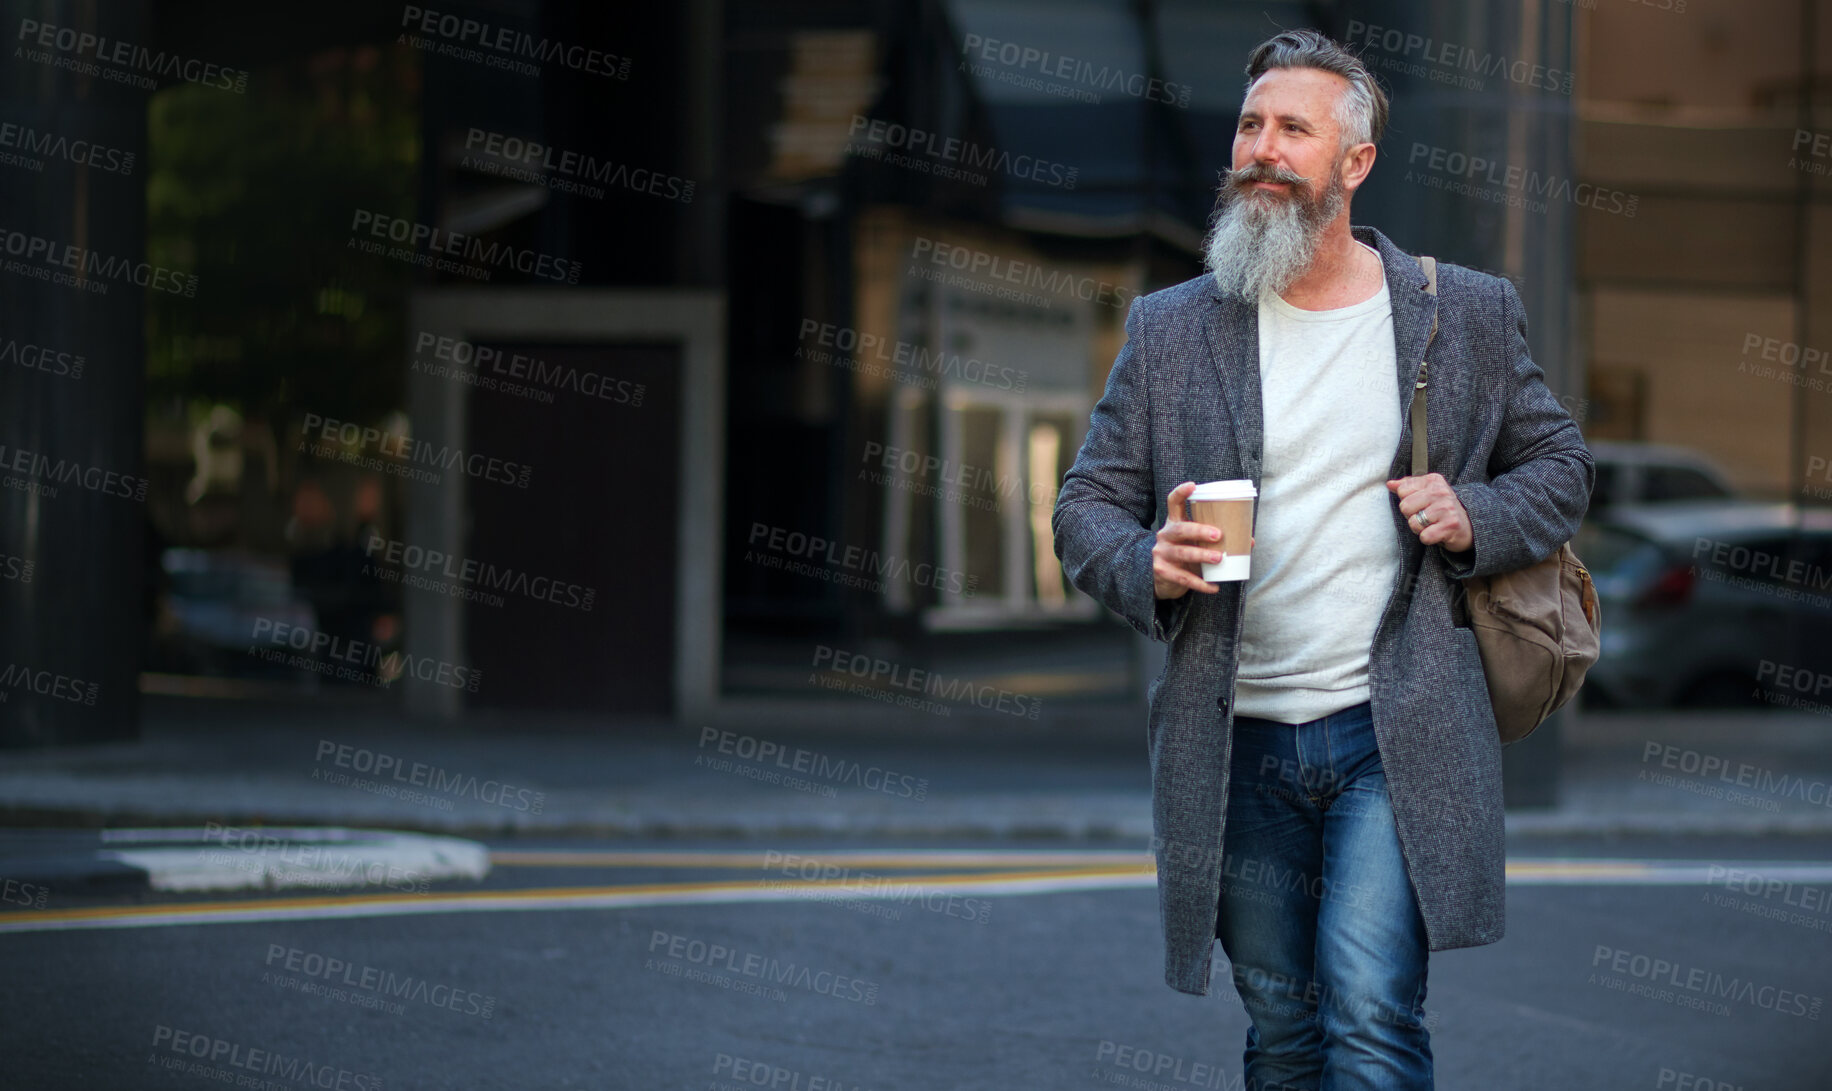 Buy stock photo confident mature businessman man walking in city street holding coffee enjoying urban lifestyle